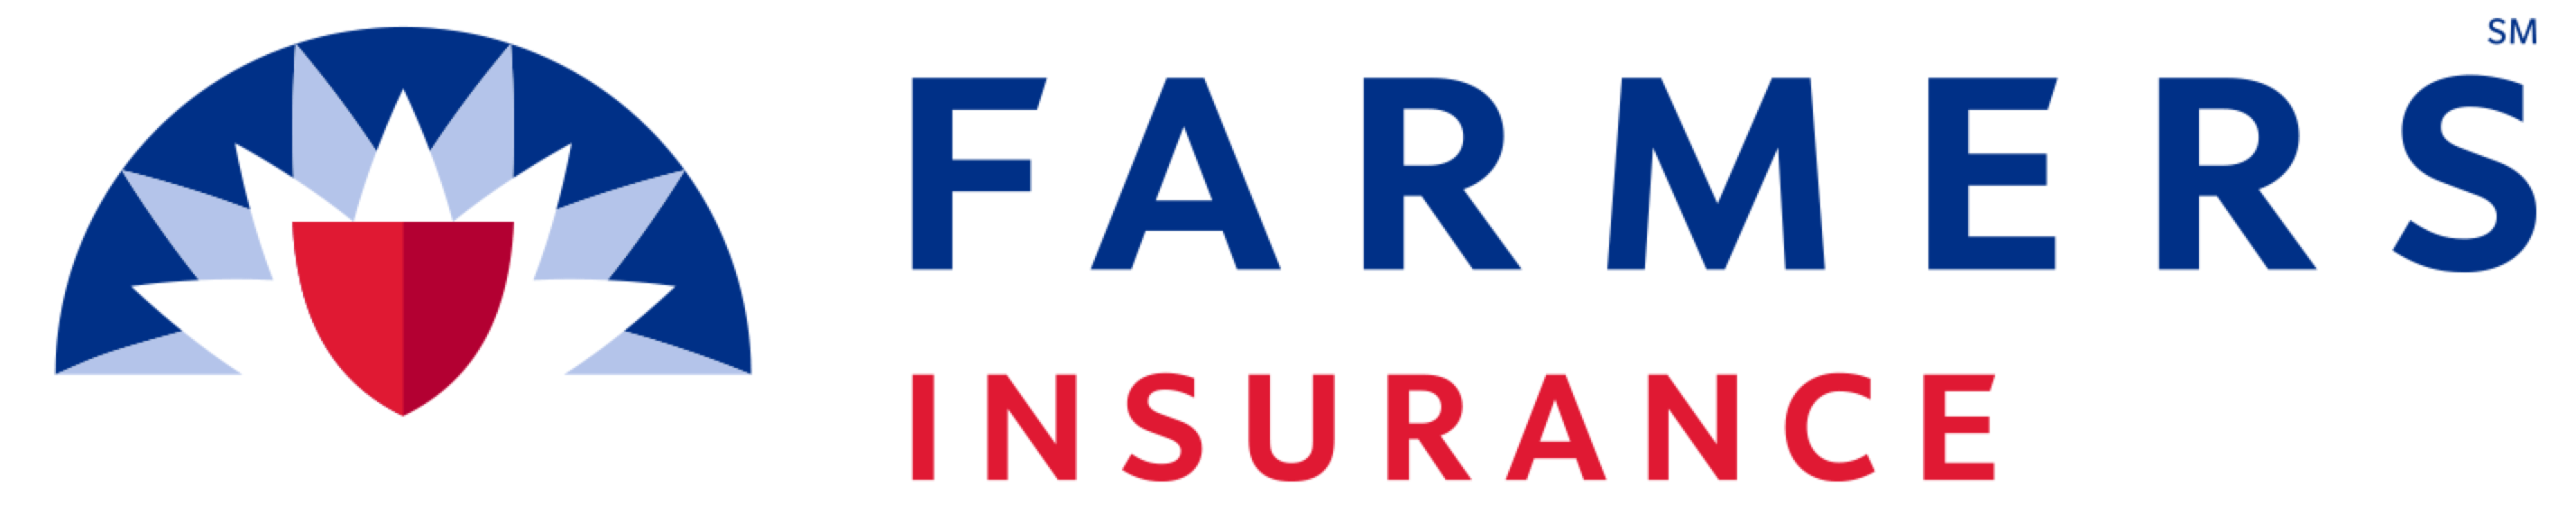 Umbrella Insurance Company with Logo - Umbrella Insurance & Umbrella Liability Insurance : Farmers Insurance